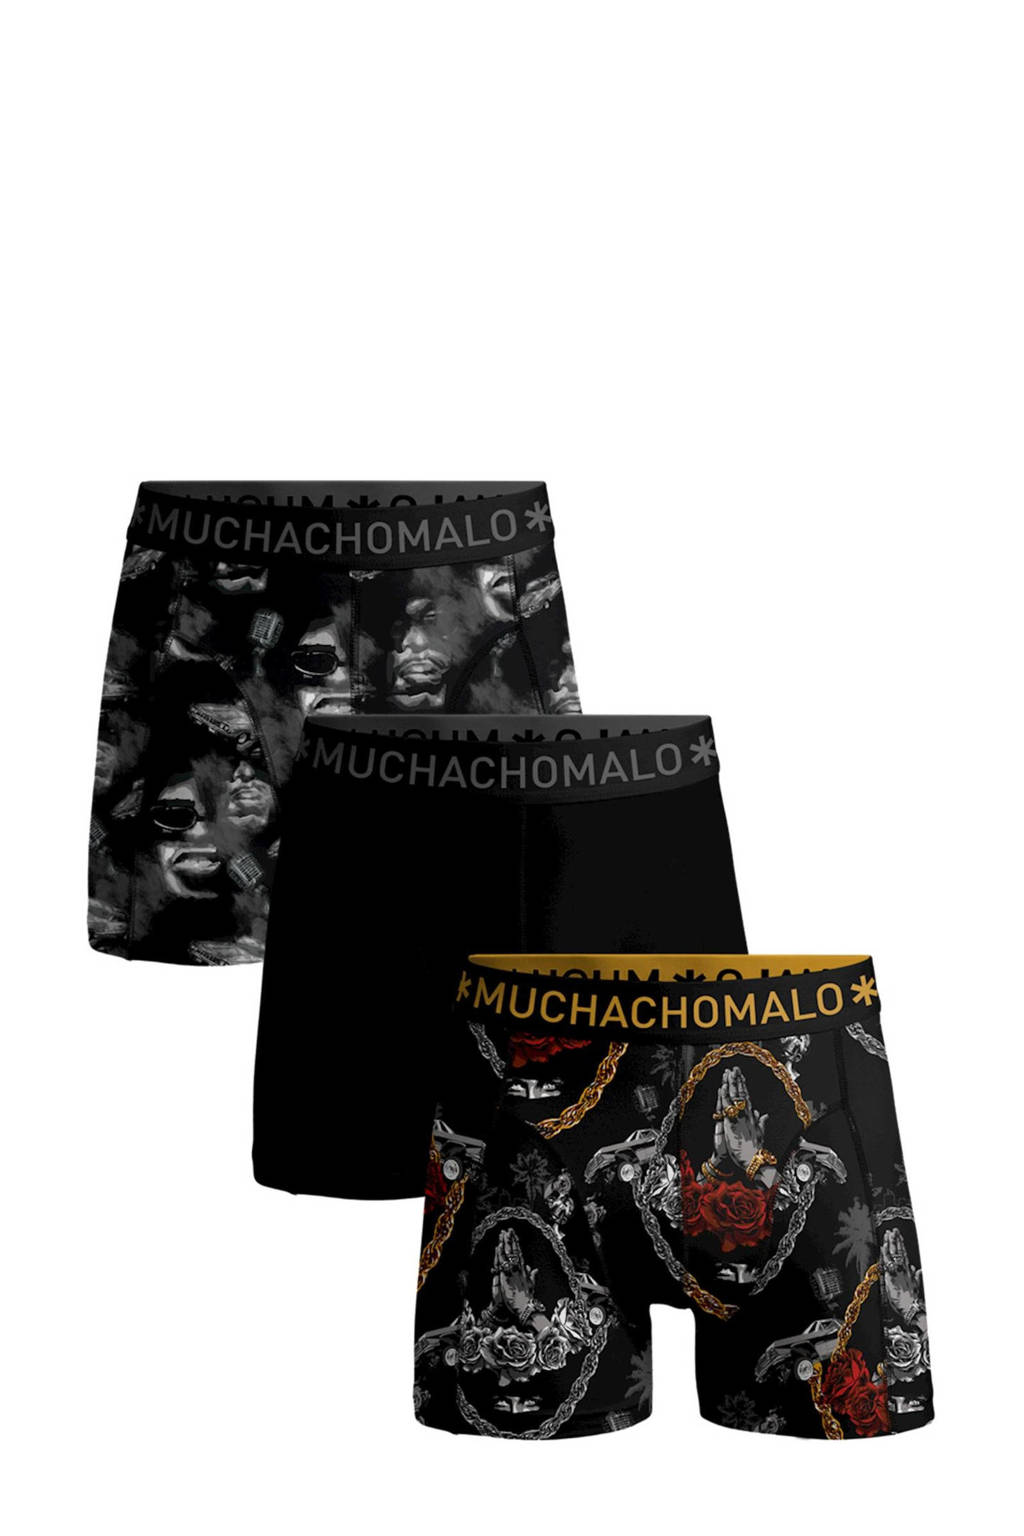 Muchachomalo   boxershort Gangsta Paradise - set van 3 zwart/grijs/goud, Zwart/grijs/goudd